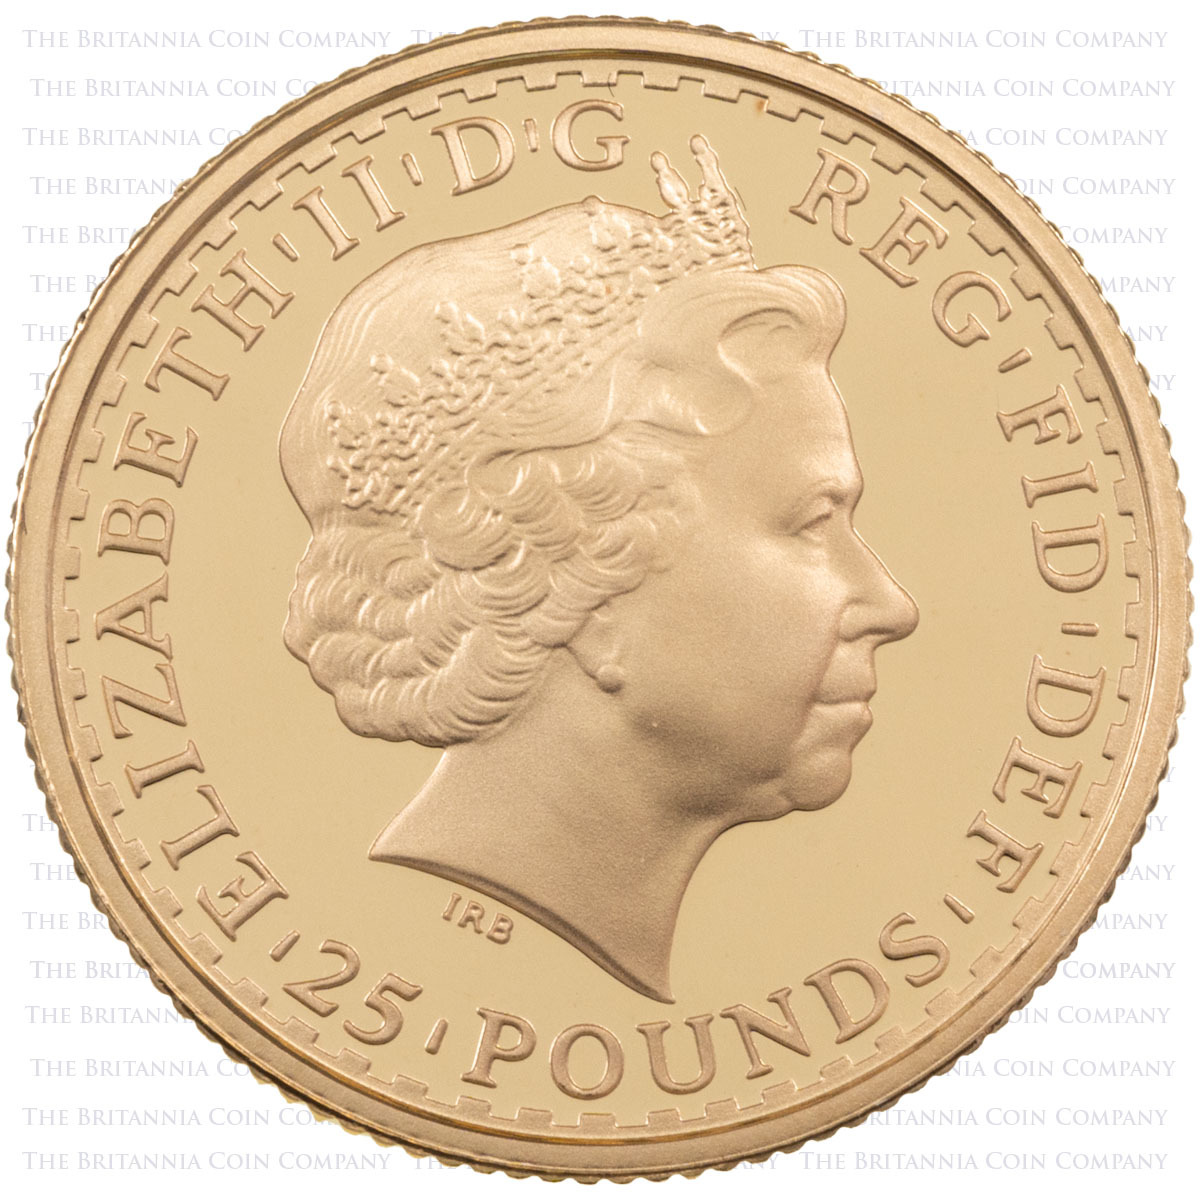 BR08QG 2008 Britannia Quarter Ounce Gold Proof Coin Obverse